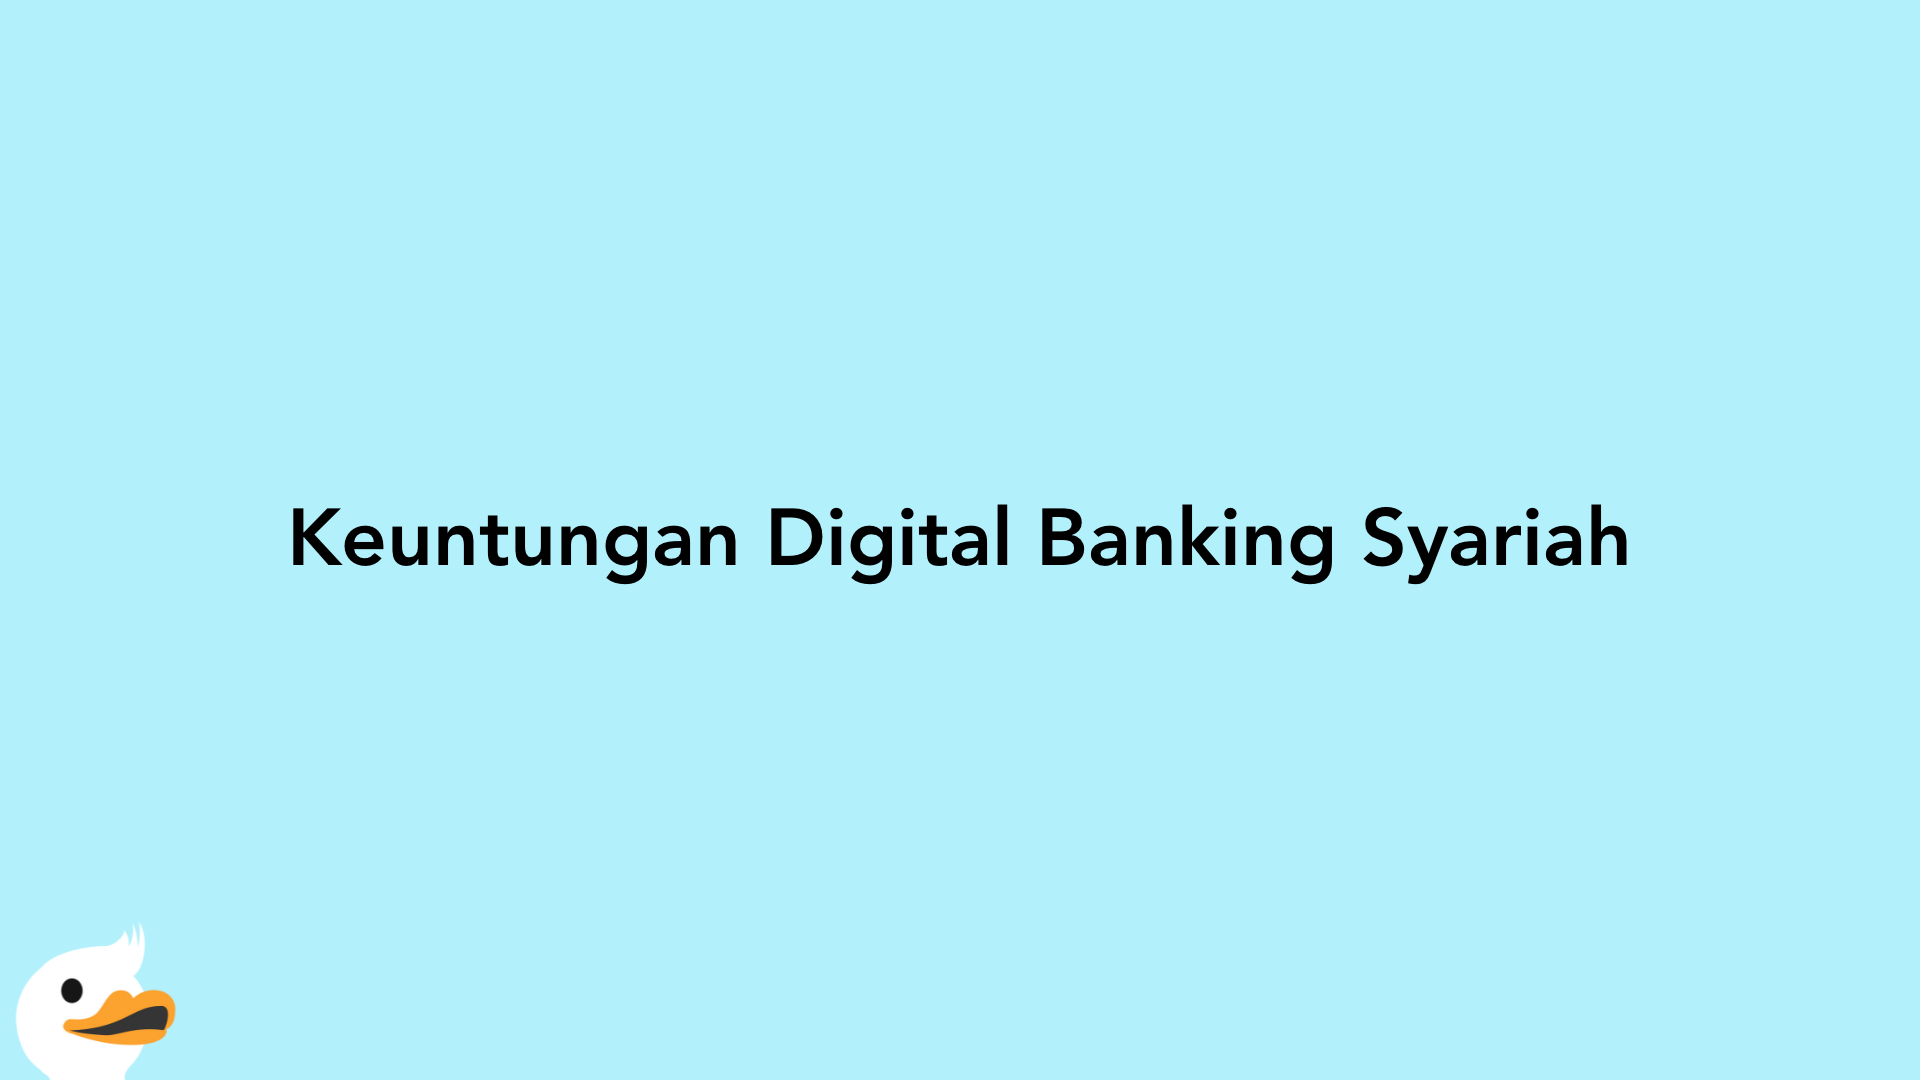 Keuntungan Digital Banking Syariah